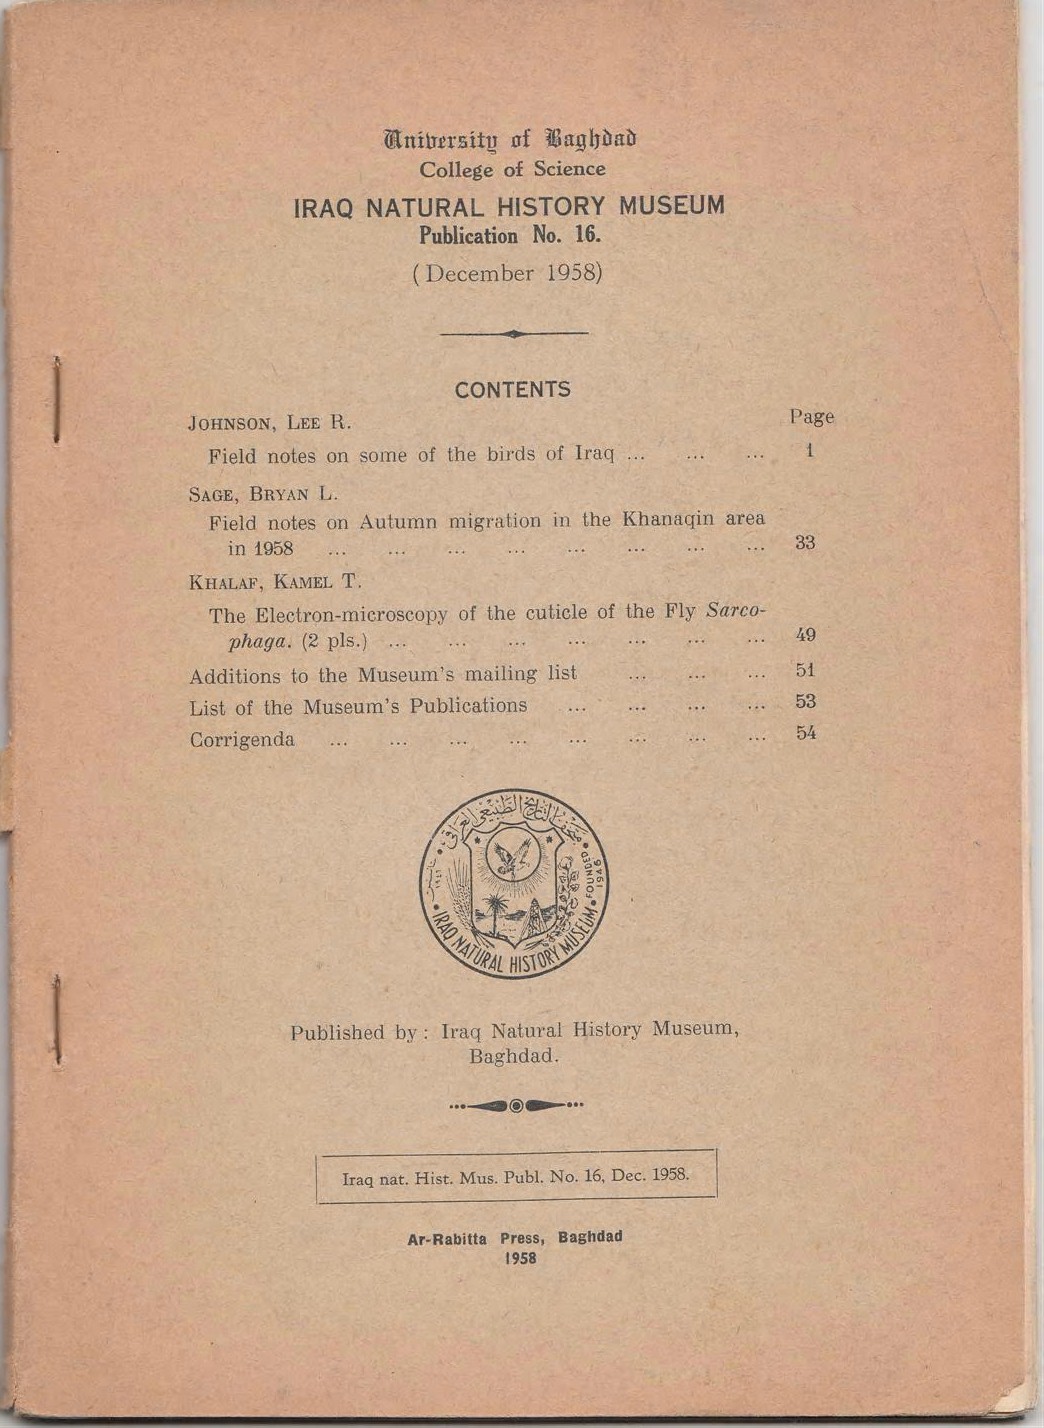 					معاينة عدد 16 (1958):  List of the Museum's Publications by KHALAF, KAMEL T. p;53  
				